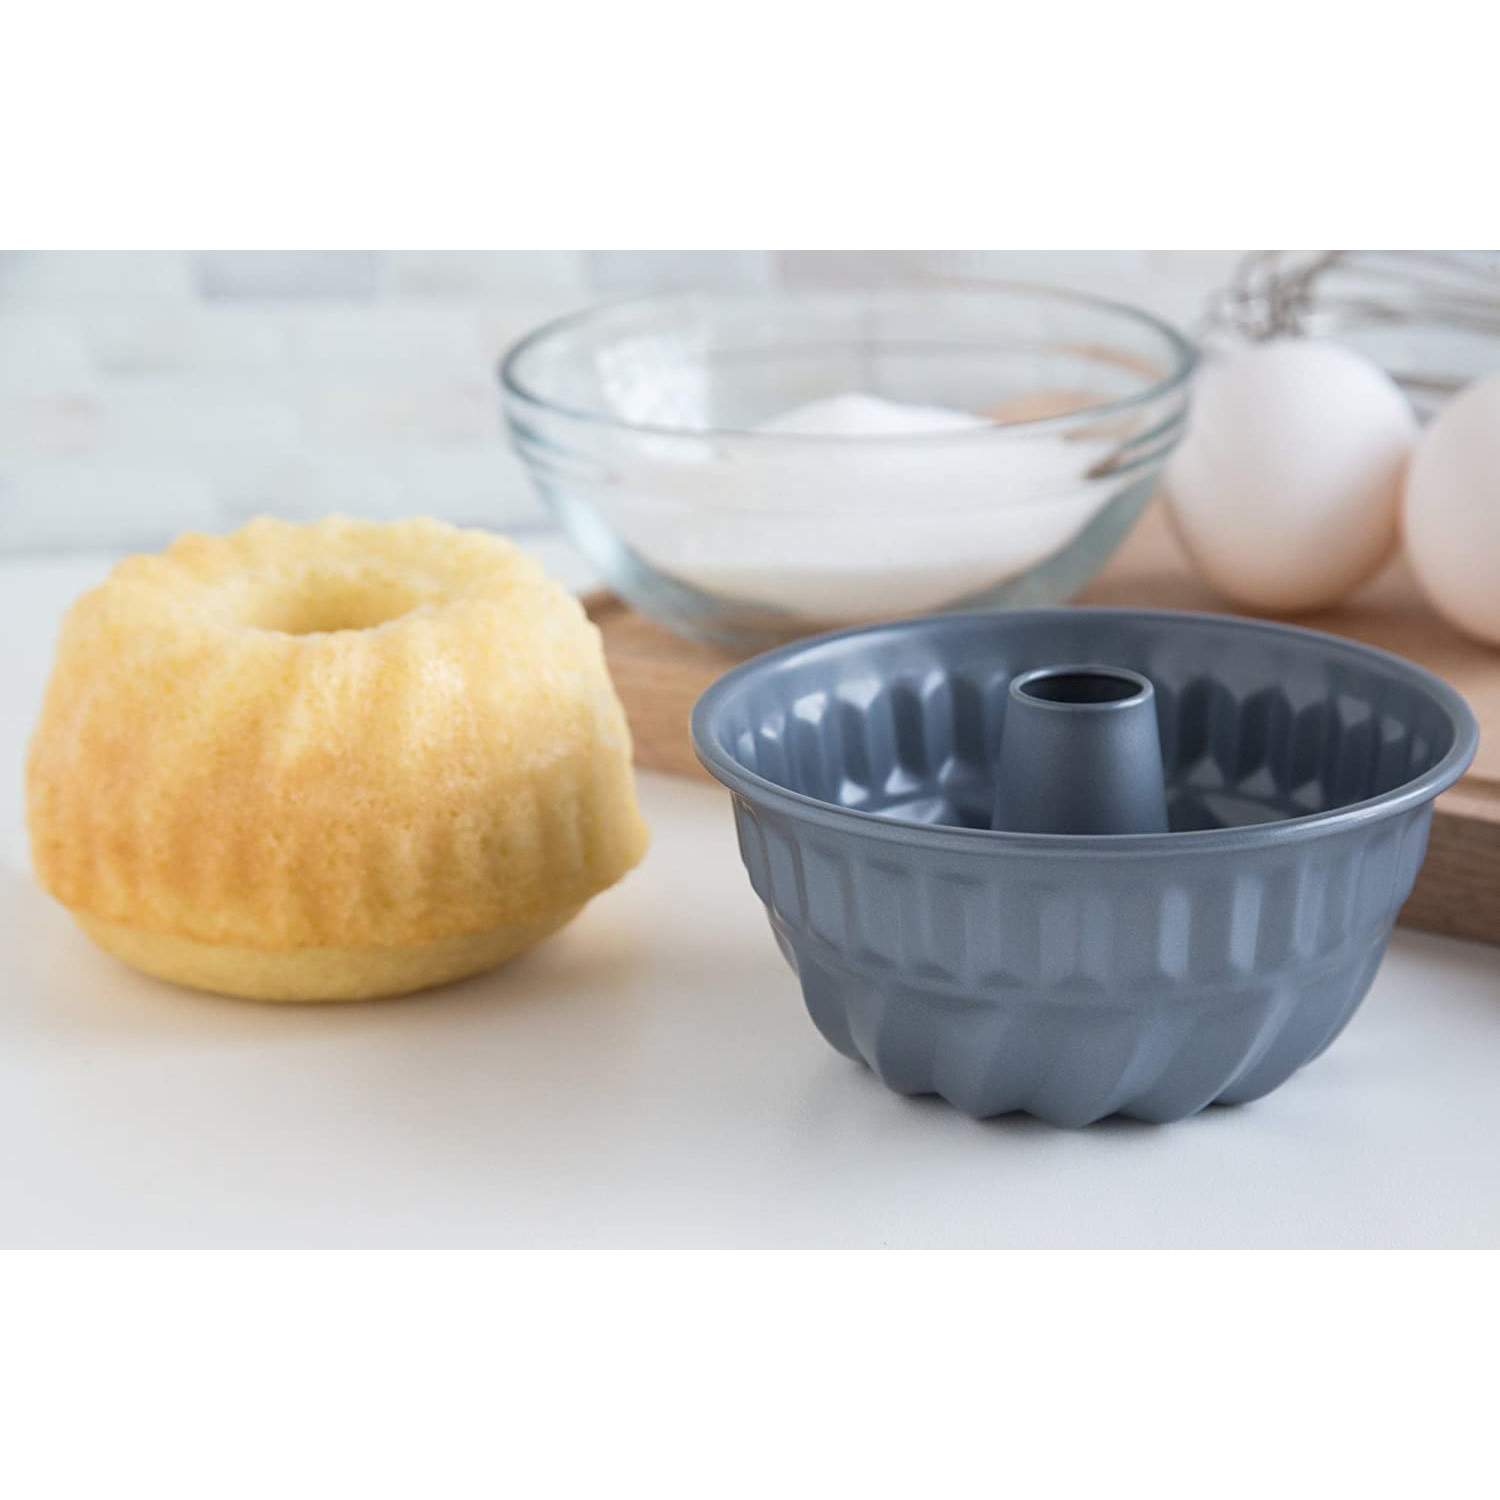 4pcs Nonstick Bundt Cake Pan Mini Tube Pans Baking Kugelhopf Bread Muffin Cake Mold for Oven and Instant Pot - Champagne Gold (4 inch)